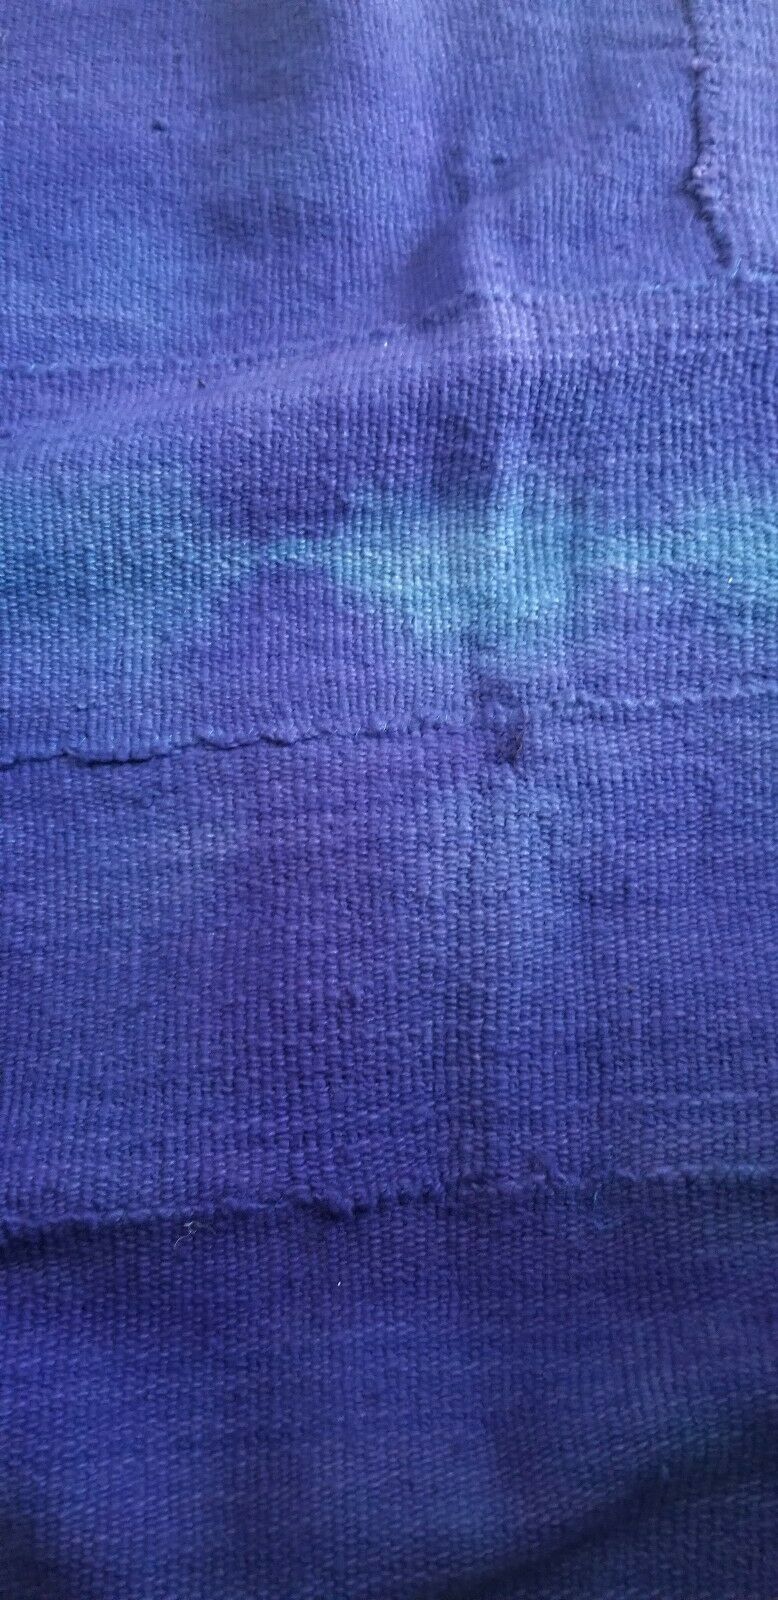 Solid Indigo, African Indigo Blue, Mudcloth Fabric 92"×21'